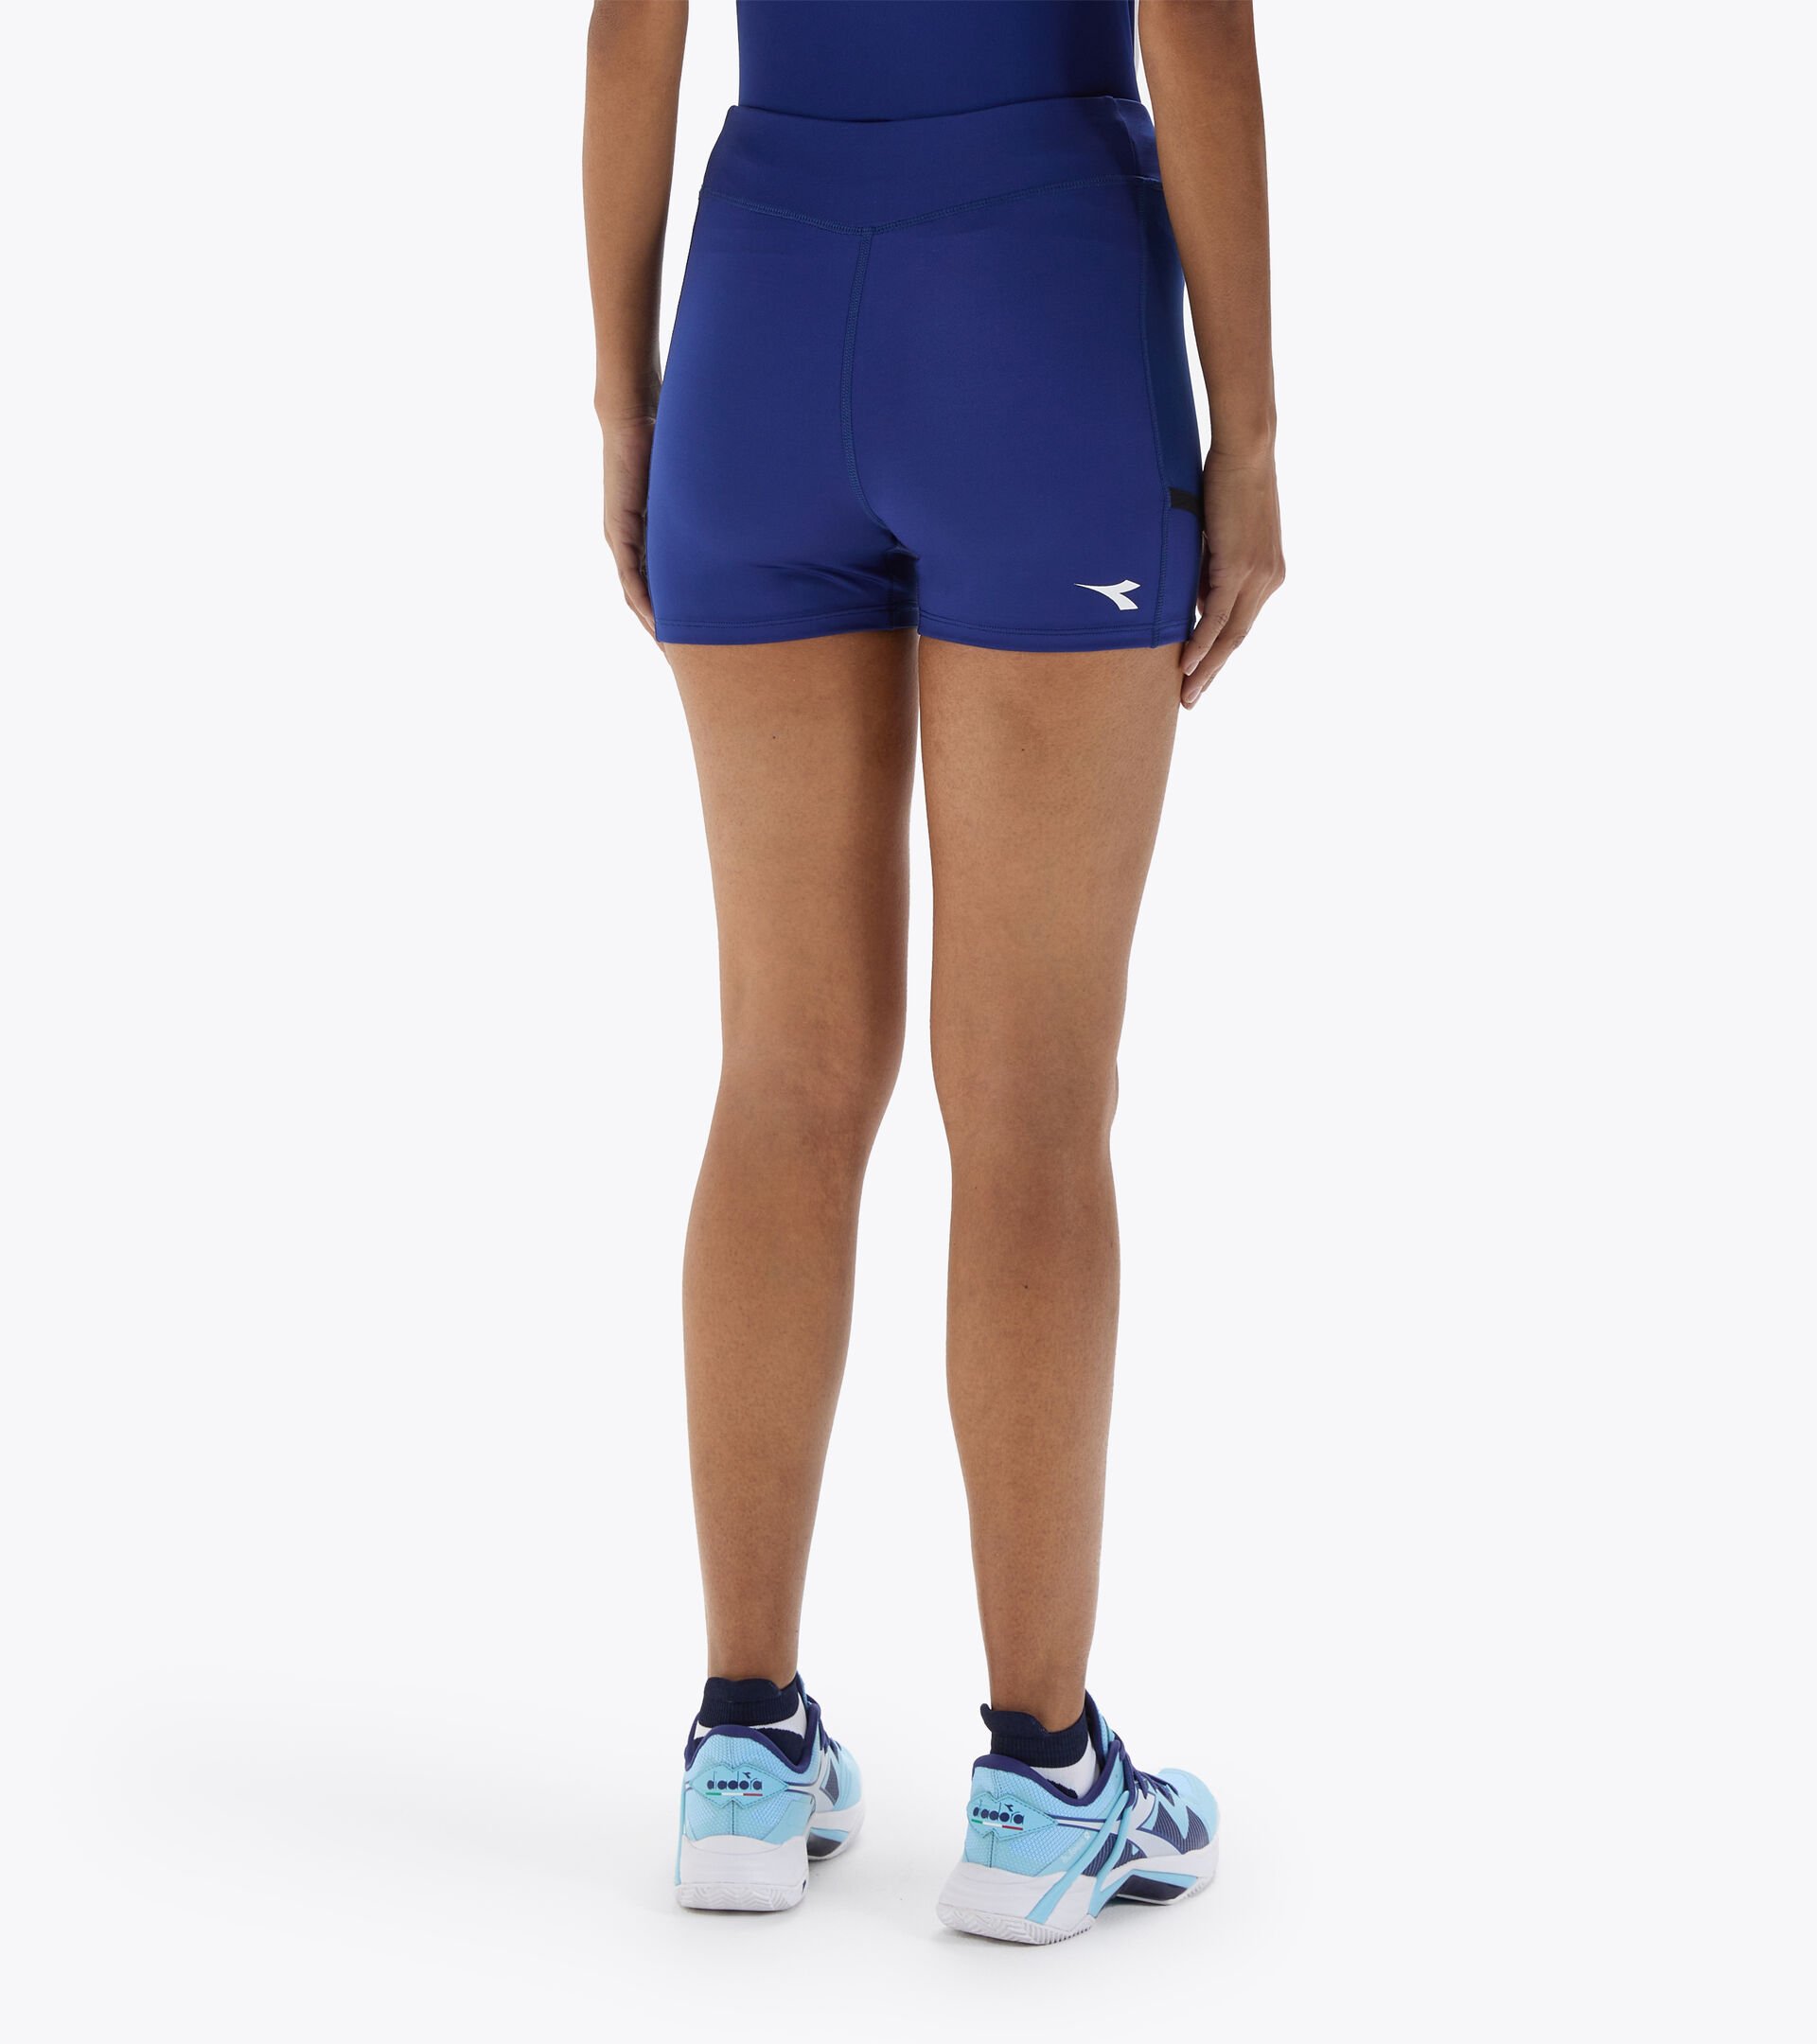 Pantaloncini da tennis - Donna L. SHORT TIGHTS POCKET BLU STAMPA - Diadora